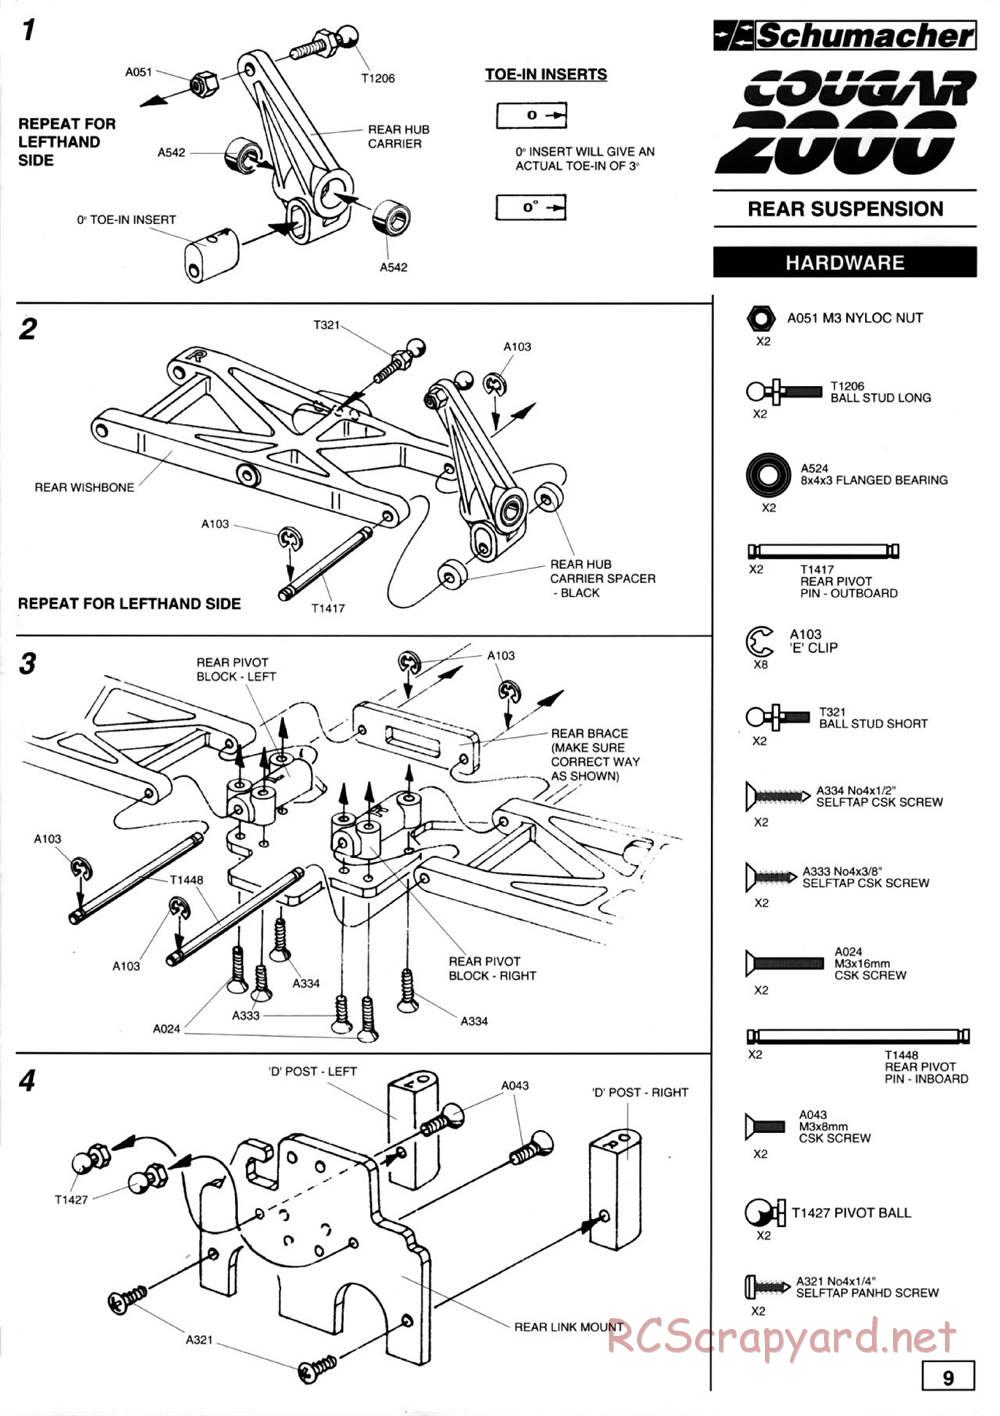 Schumacher - Cougar 2000 - Manual - Page 11